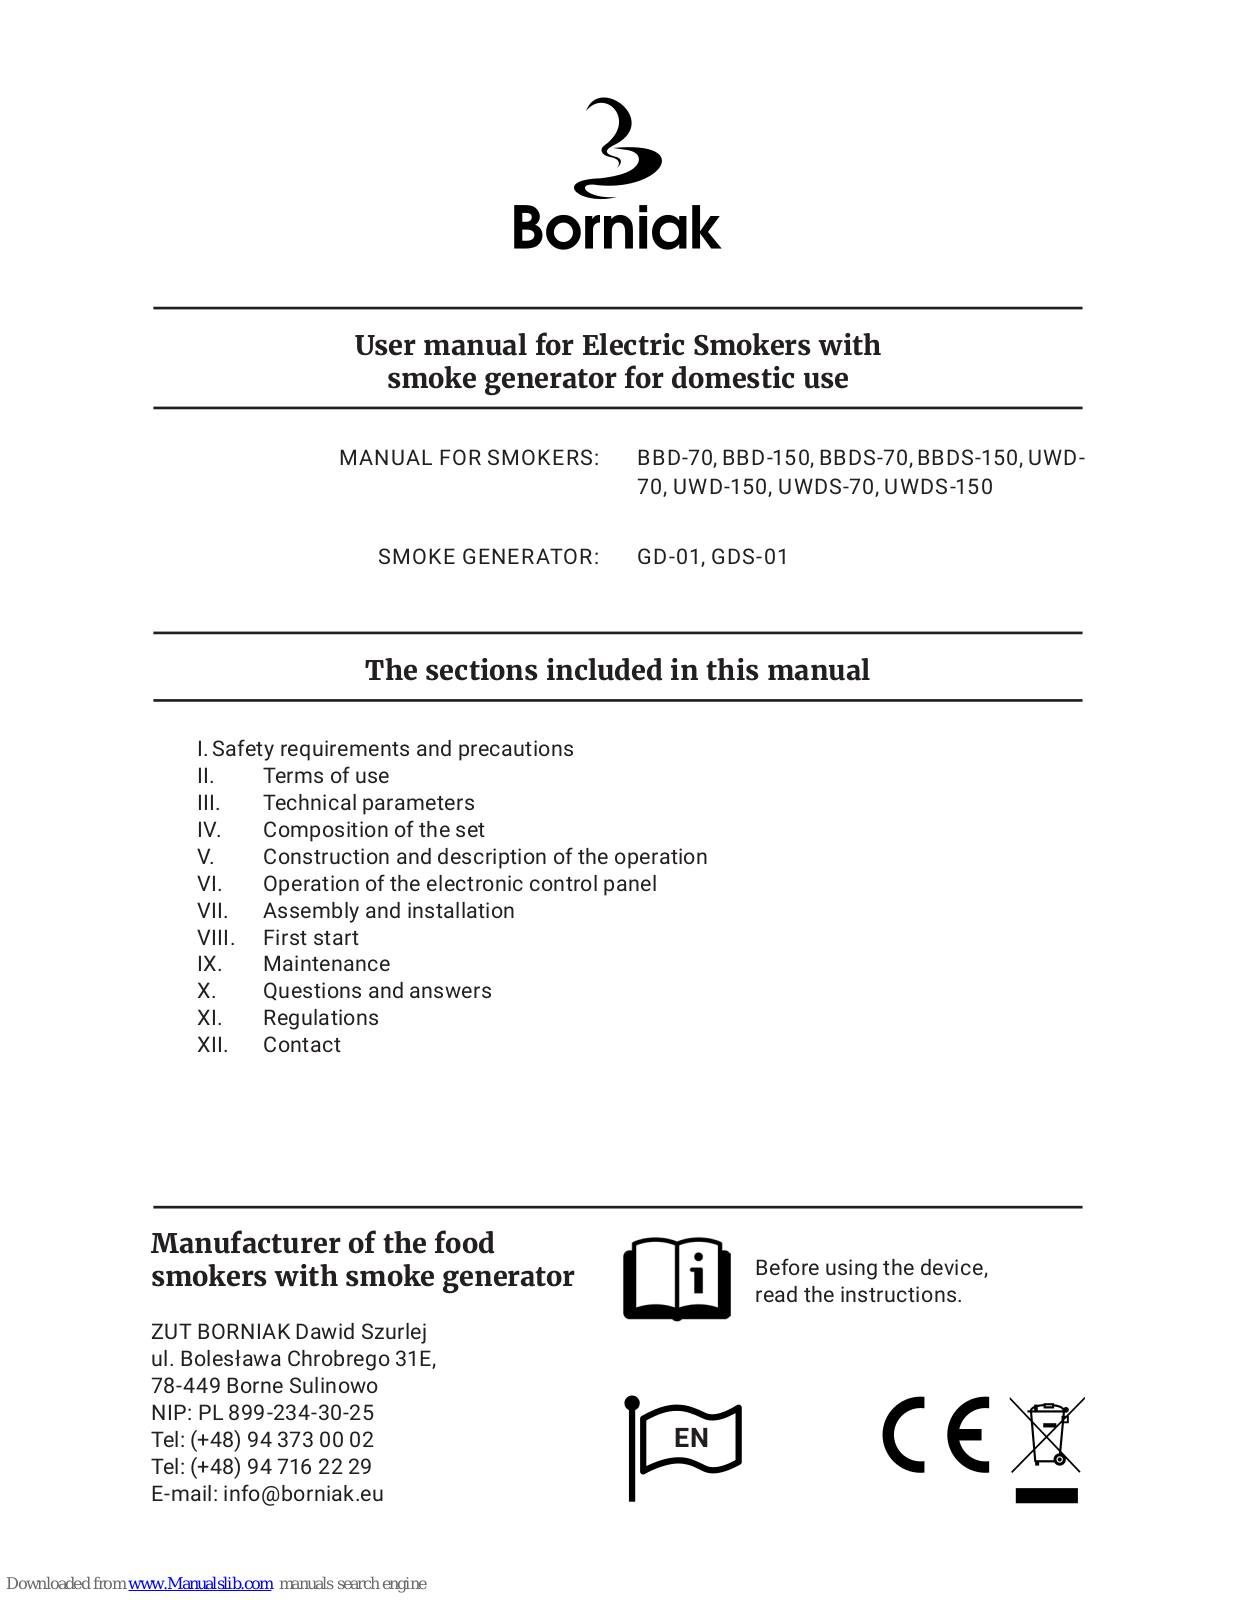 BORNIAK BBD-70, BBD-150, BBDS-70, BBDS-150, UWD70 User Manual